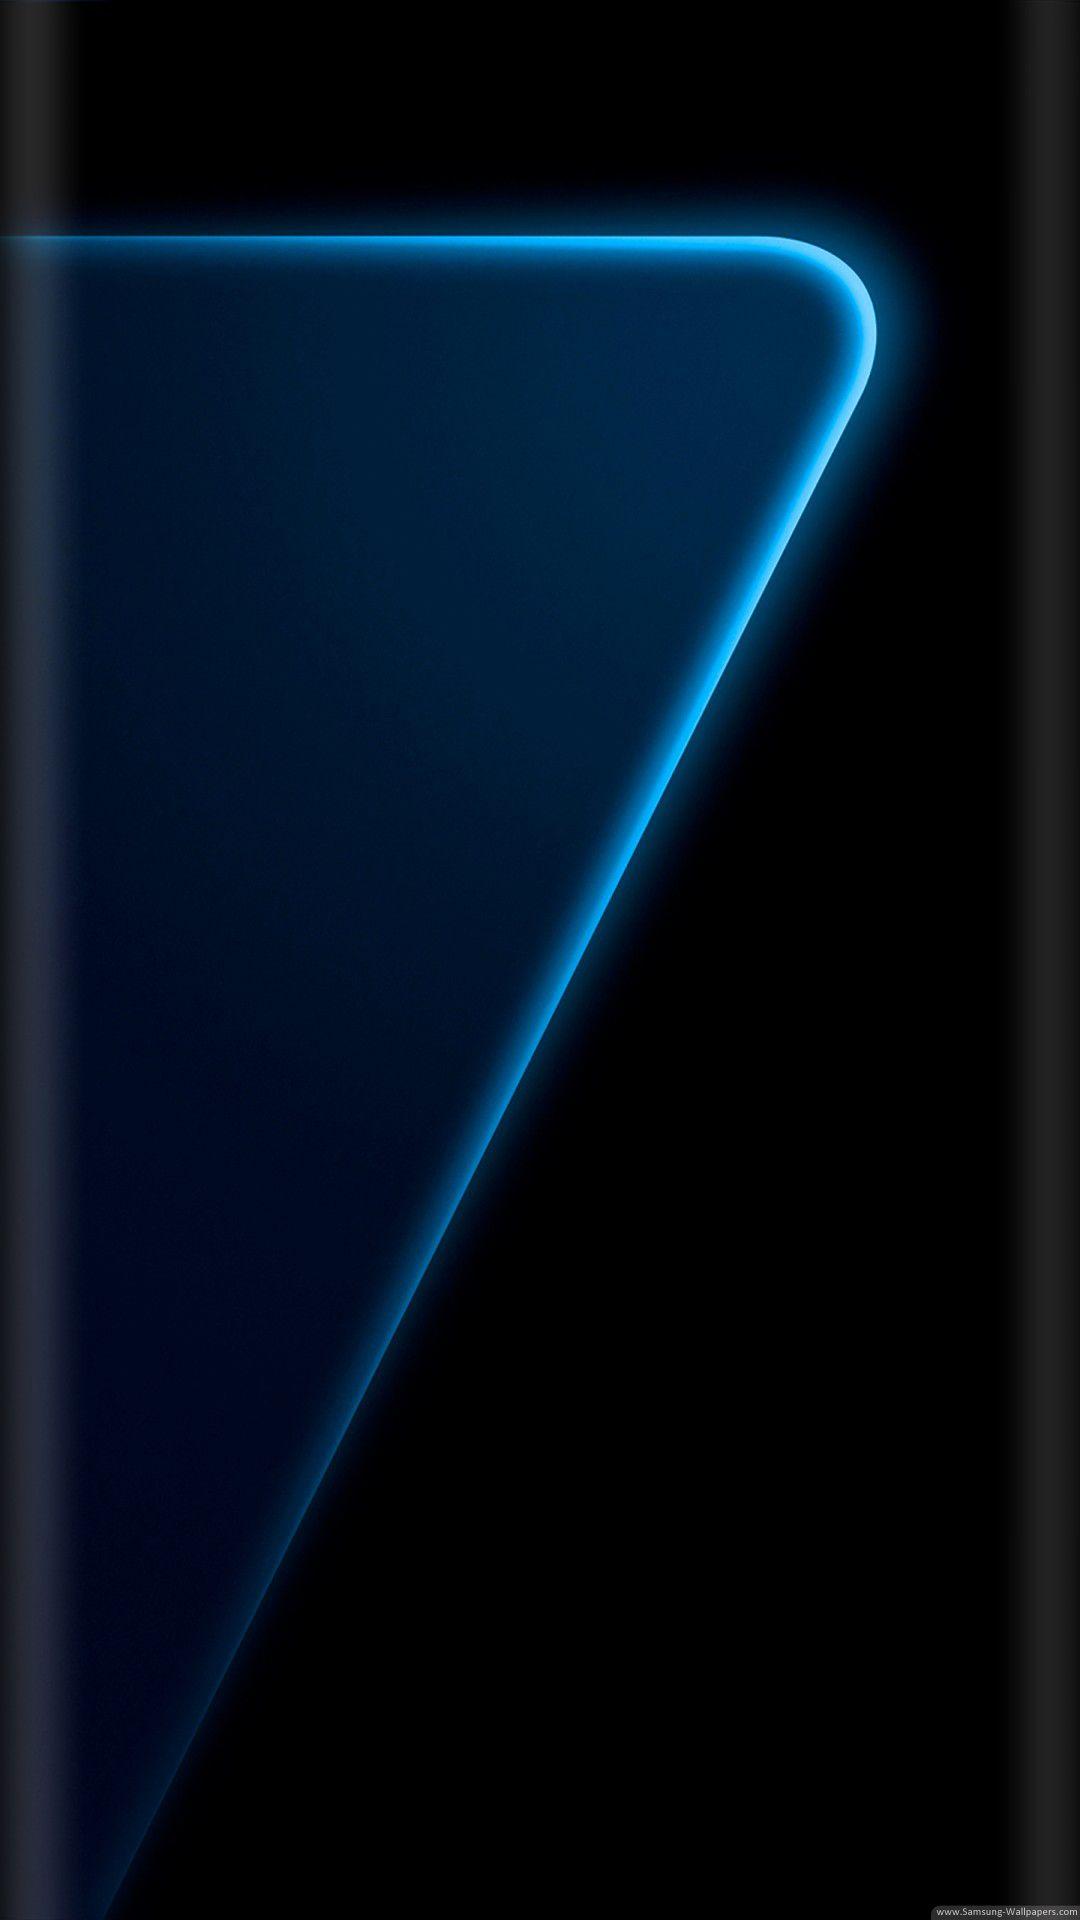 Samsung HD Wallpaper (24)